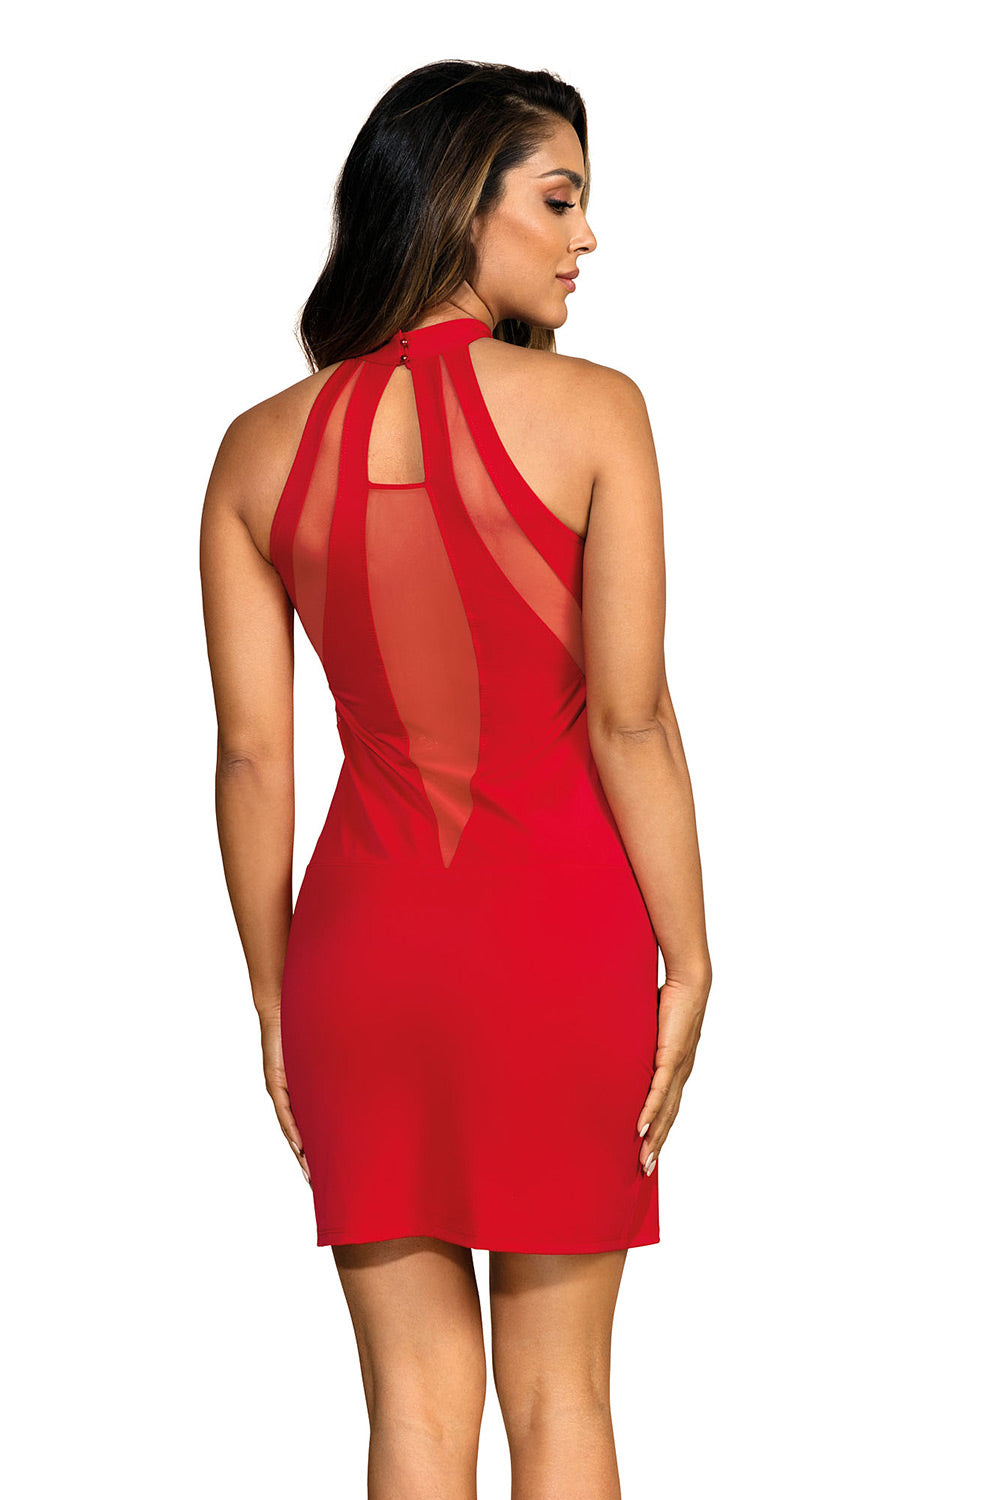 Sexy Dress model 144087 Axami